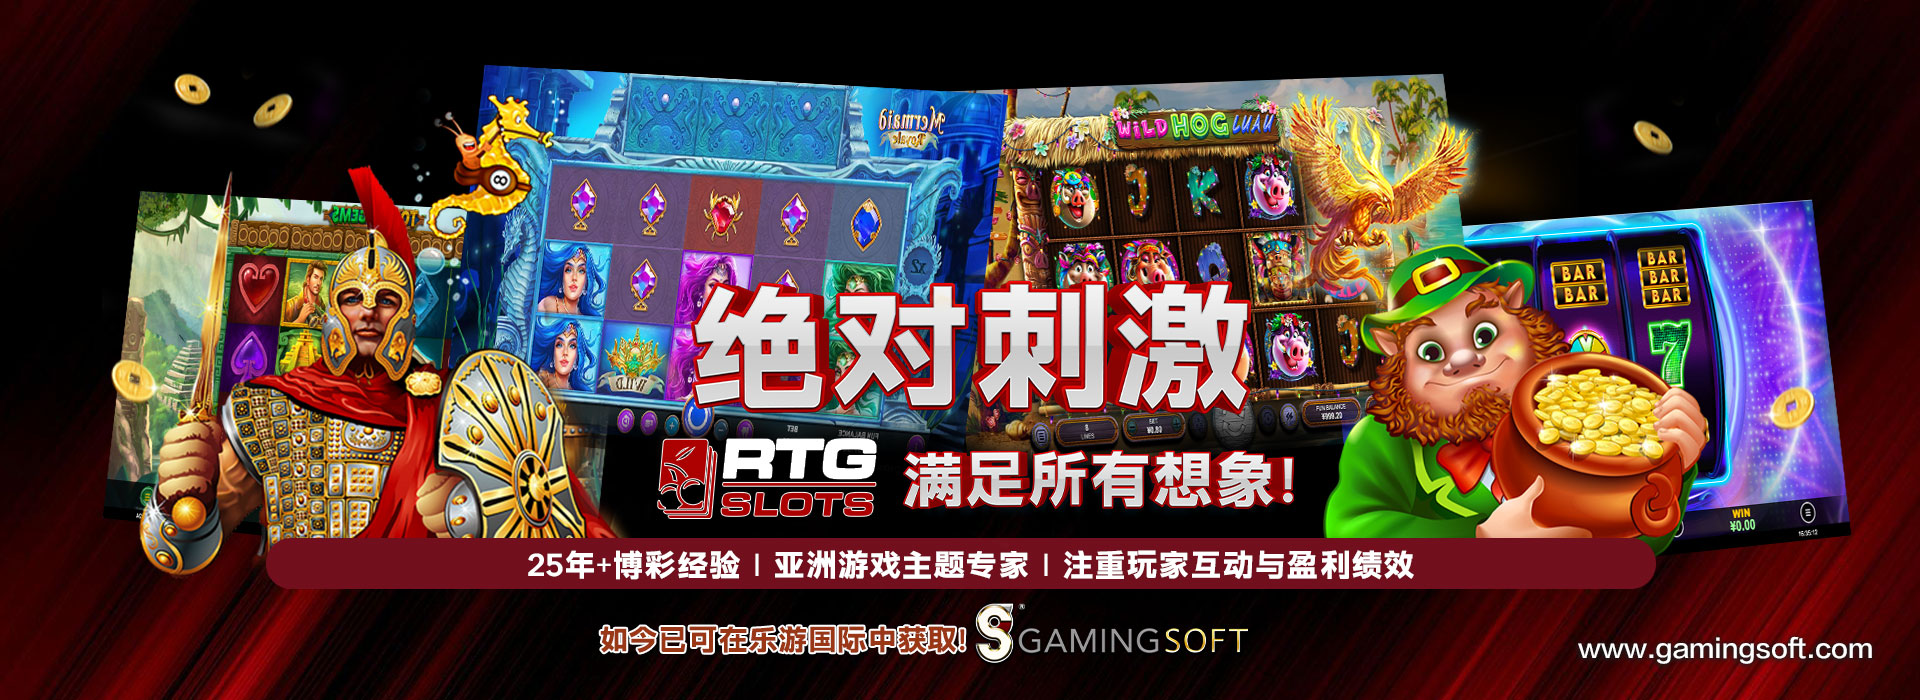 RTG Slots 绝对刺激 满足所有想象 网页横幅 - 乐游国际GamingSoft